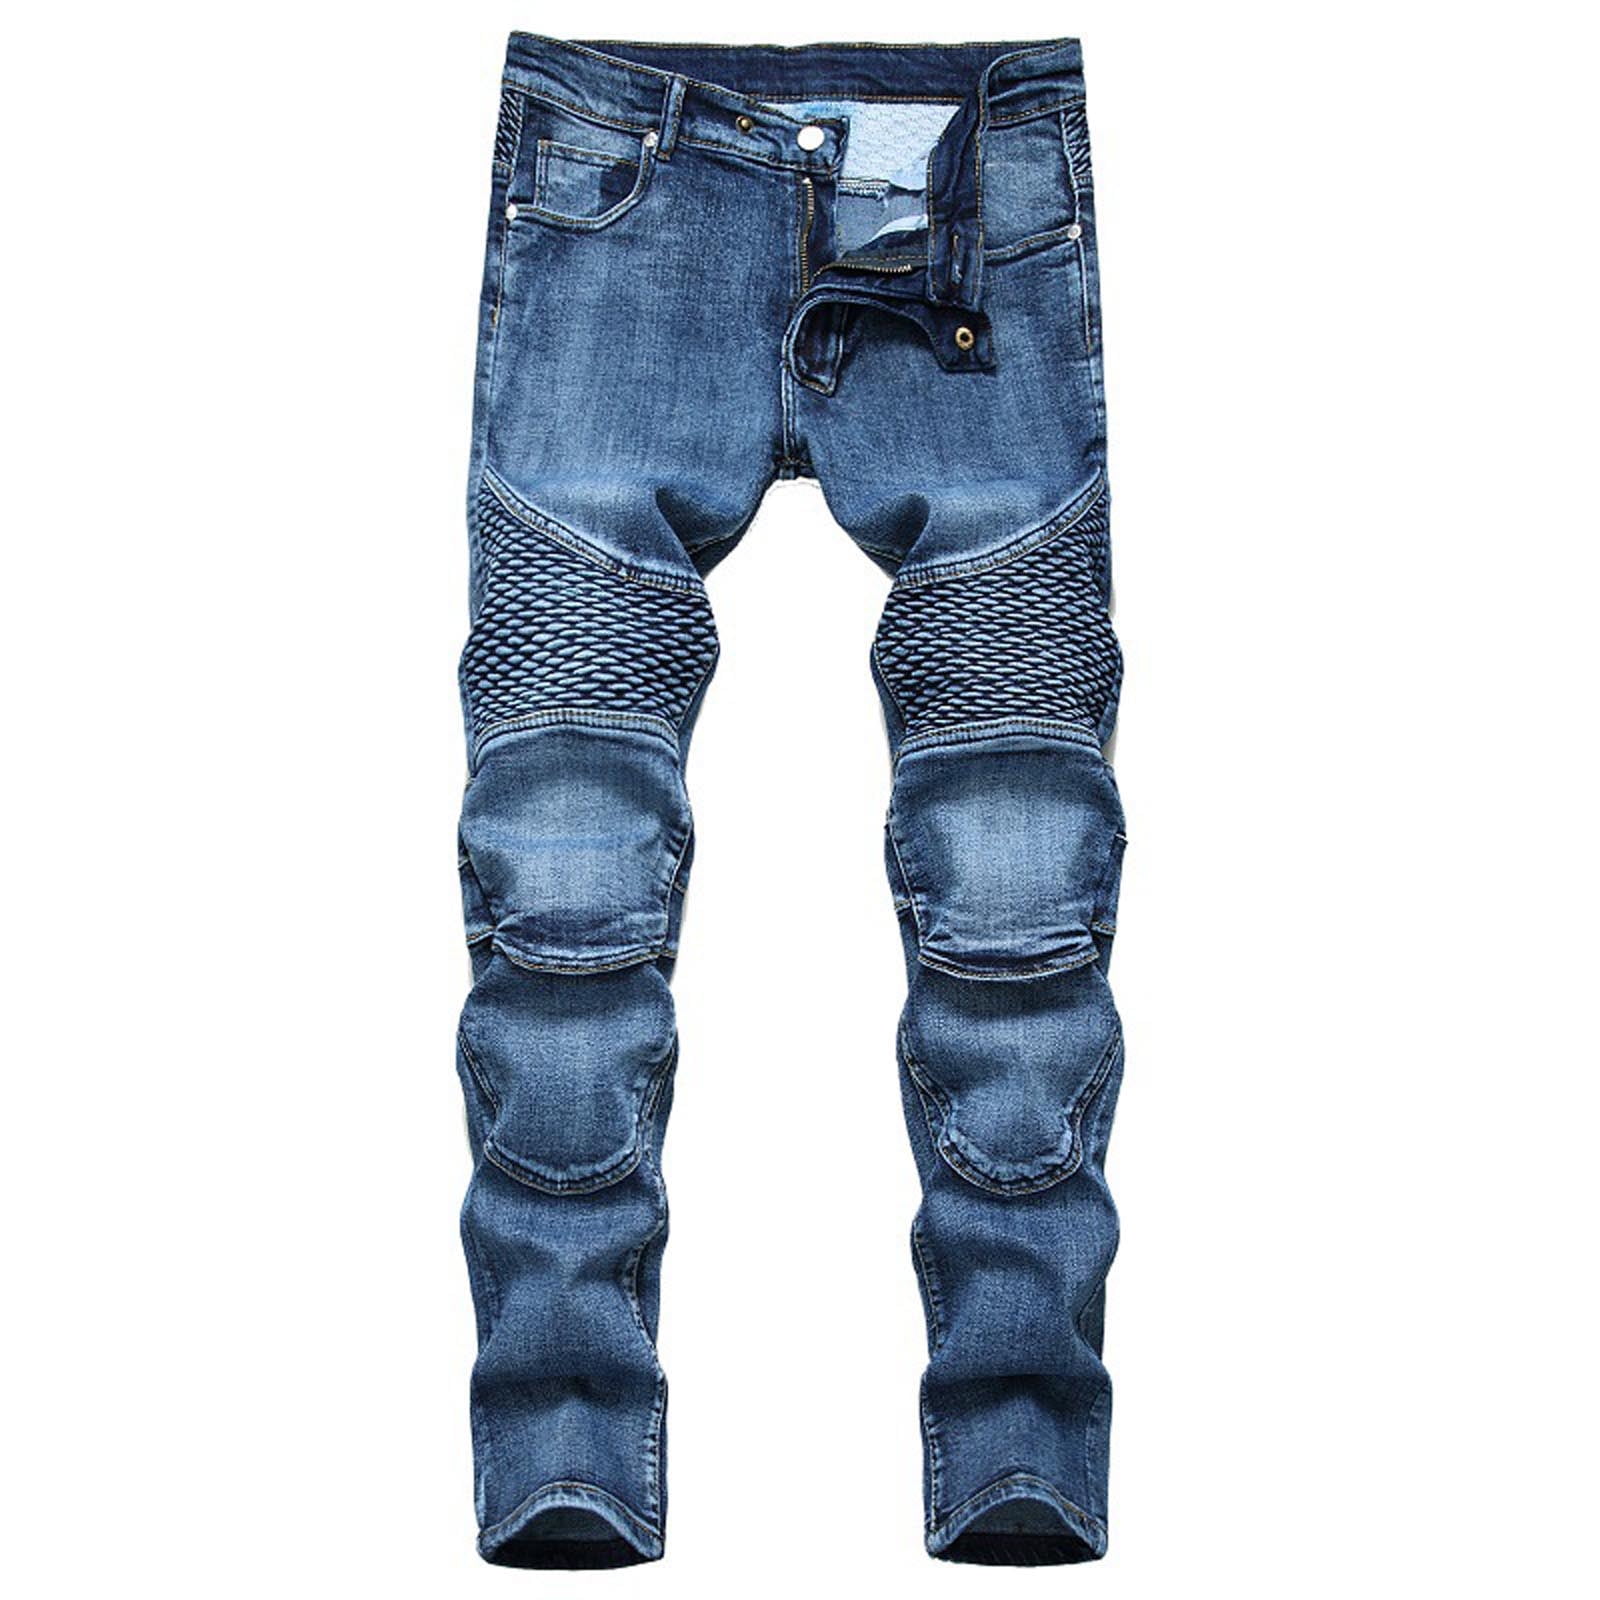 42 44 Plus Size Jeans Men Denim Pants Baggy Straight Jeans Pants Fashion  Causal Trousers Male